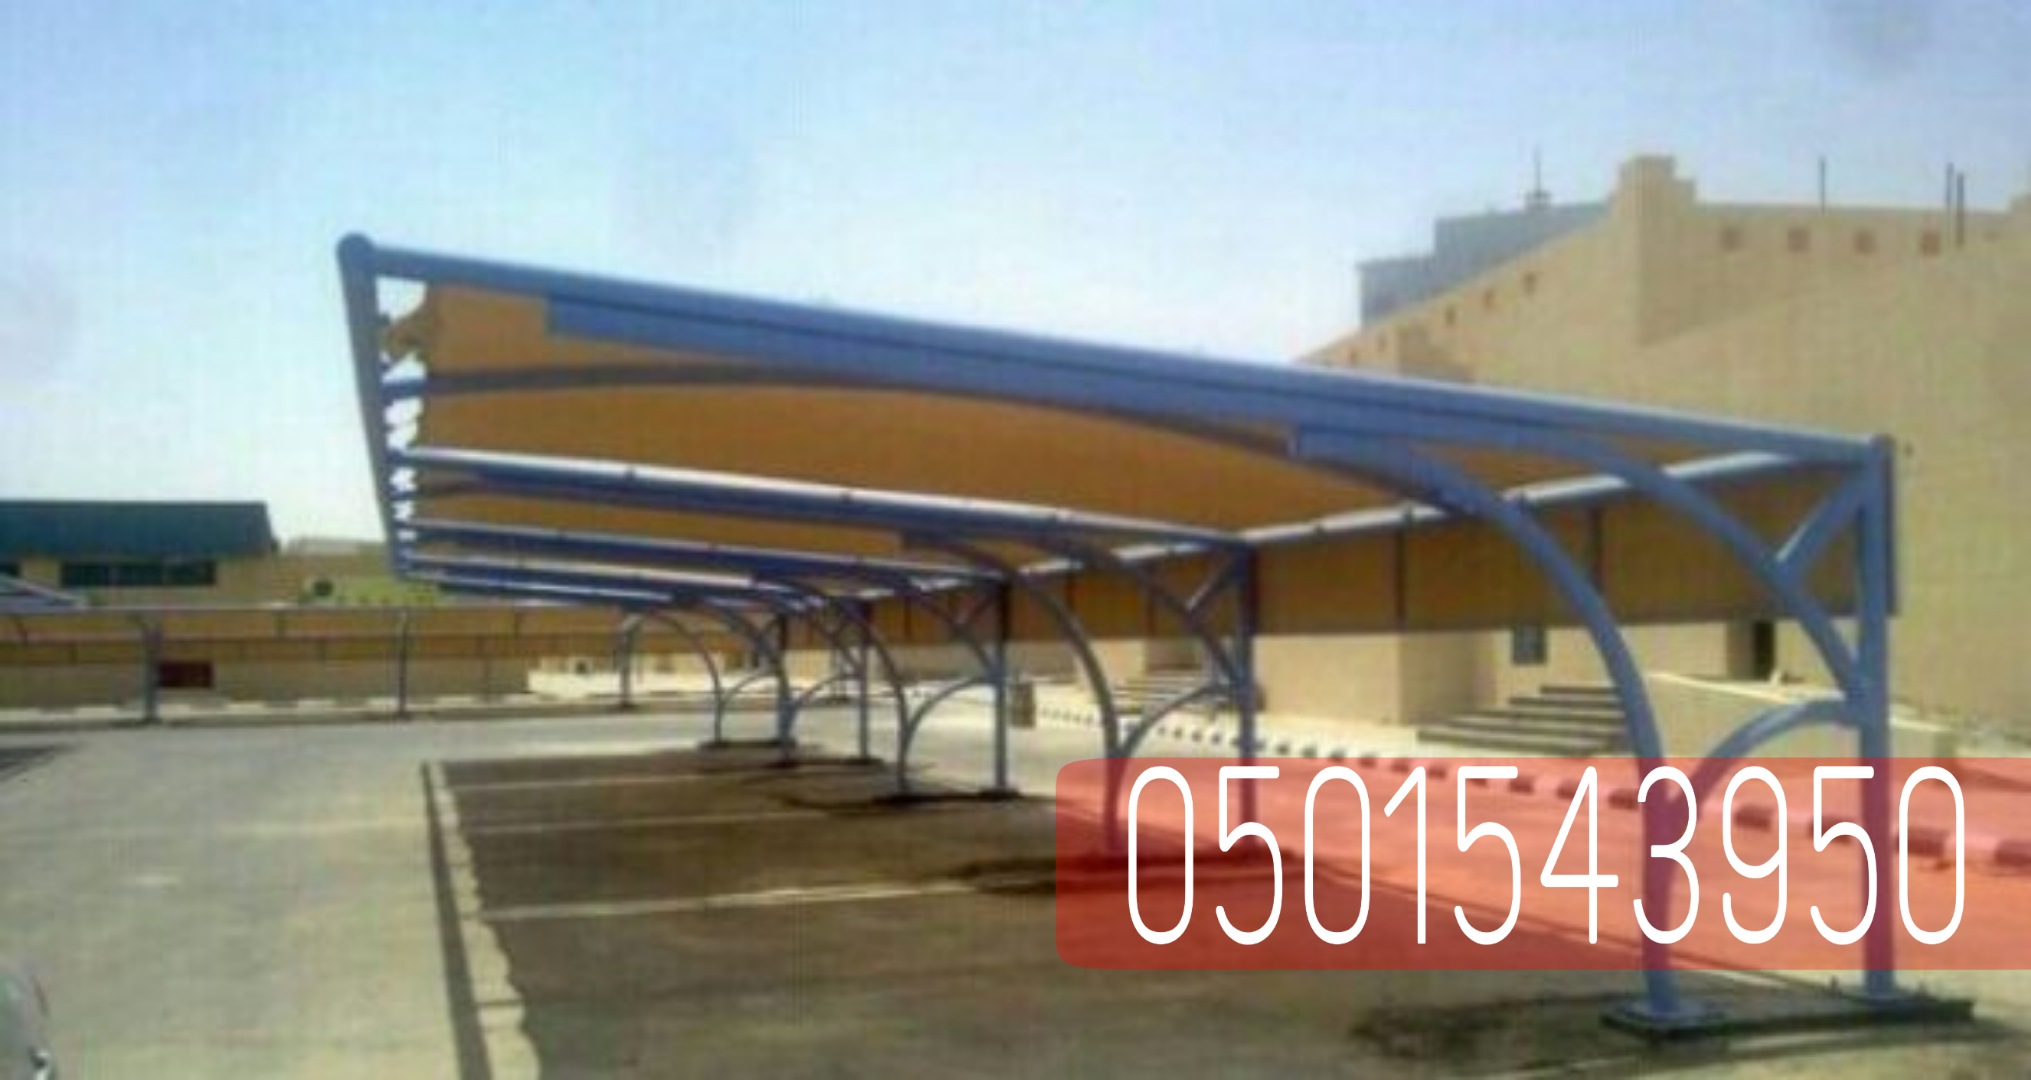 حداد مظلات سيارات في جدة , 0501543950  P_22384p7br1